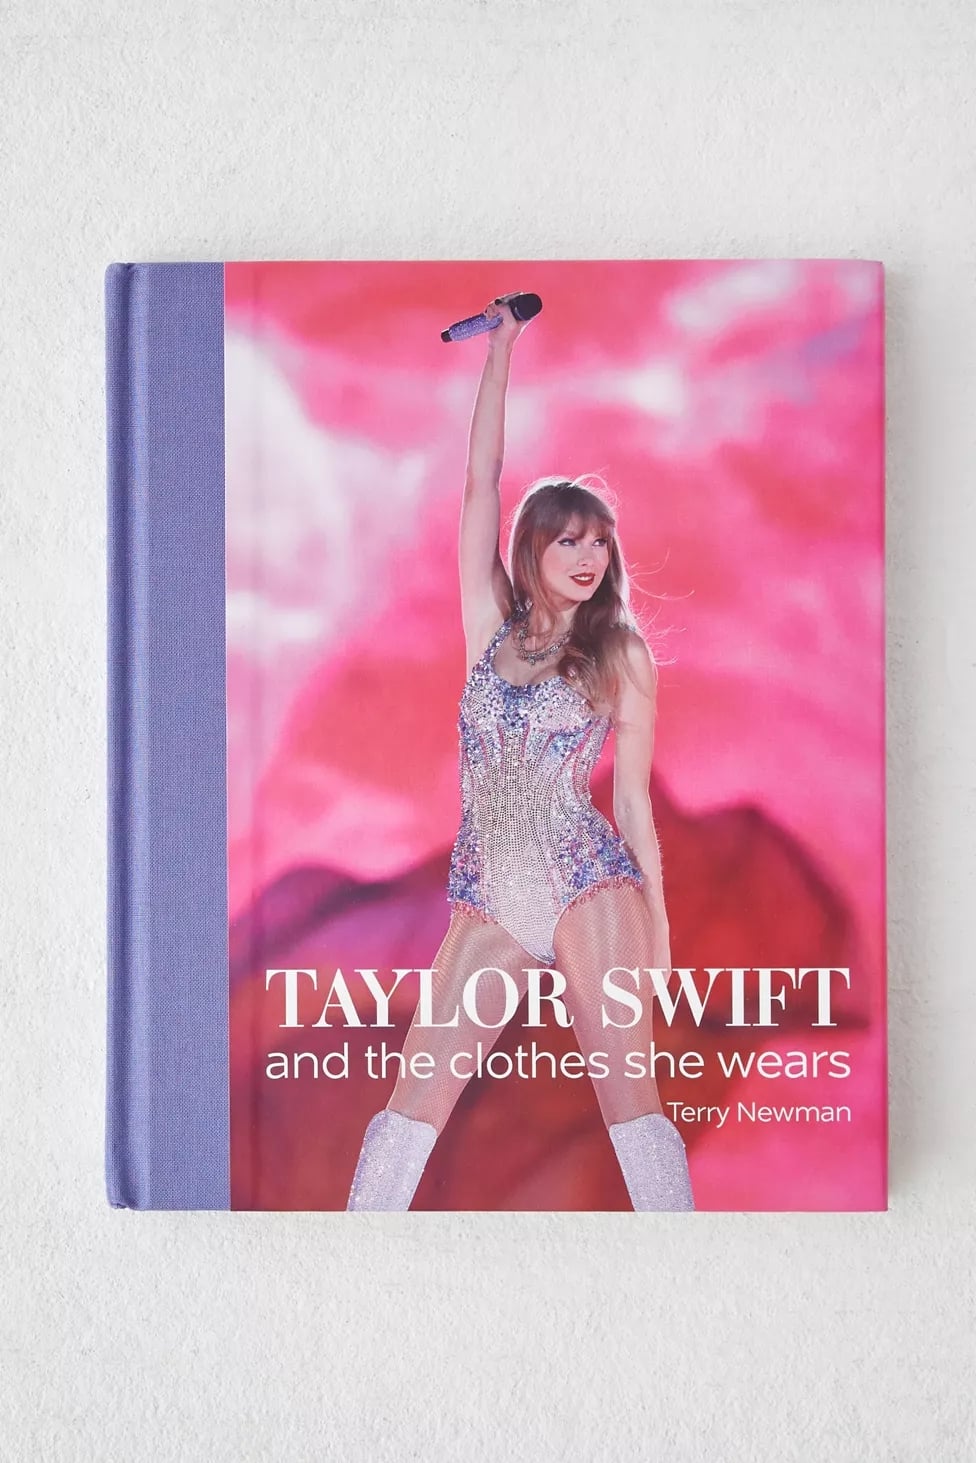 Taylor Swift Lover Vinyl Record Song Lyric Music Art Print - Red Heart Print